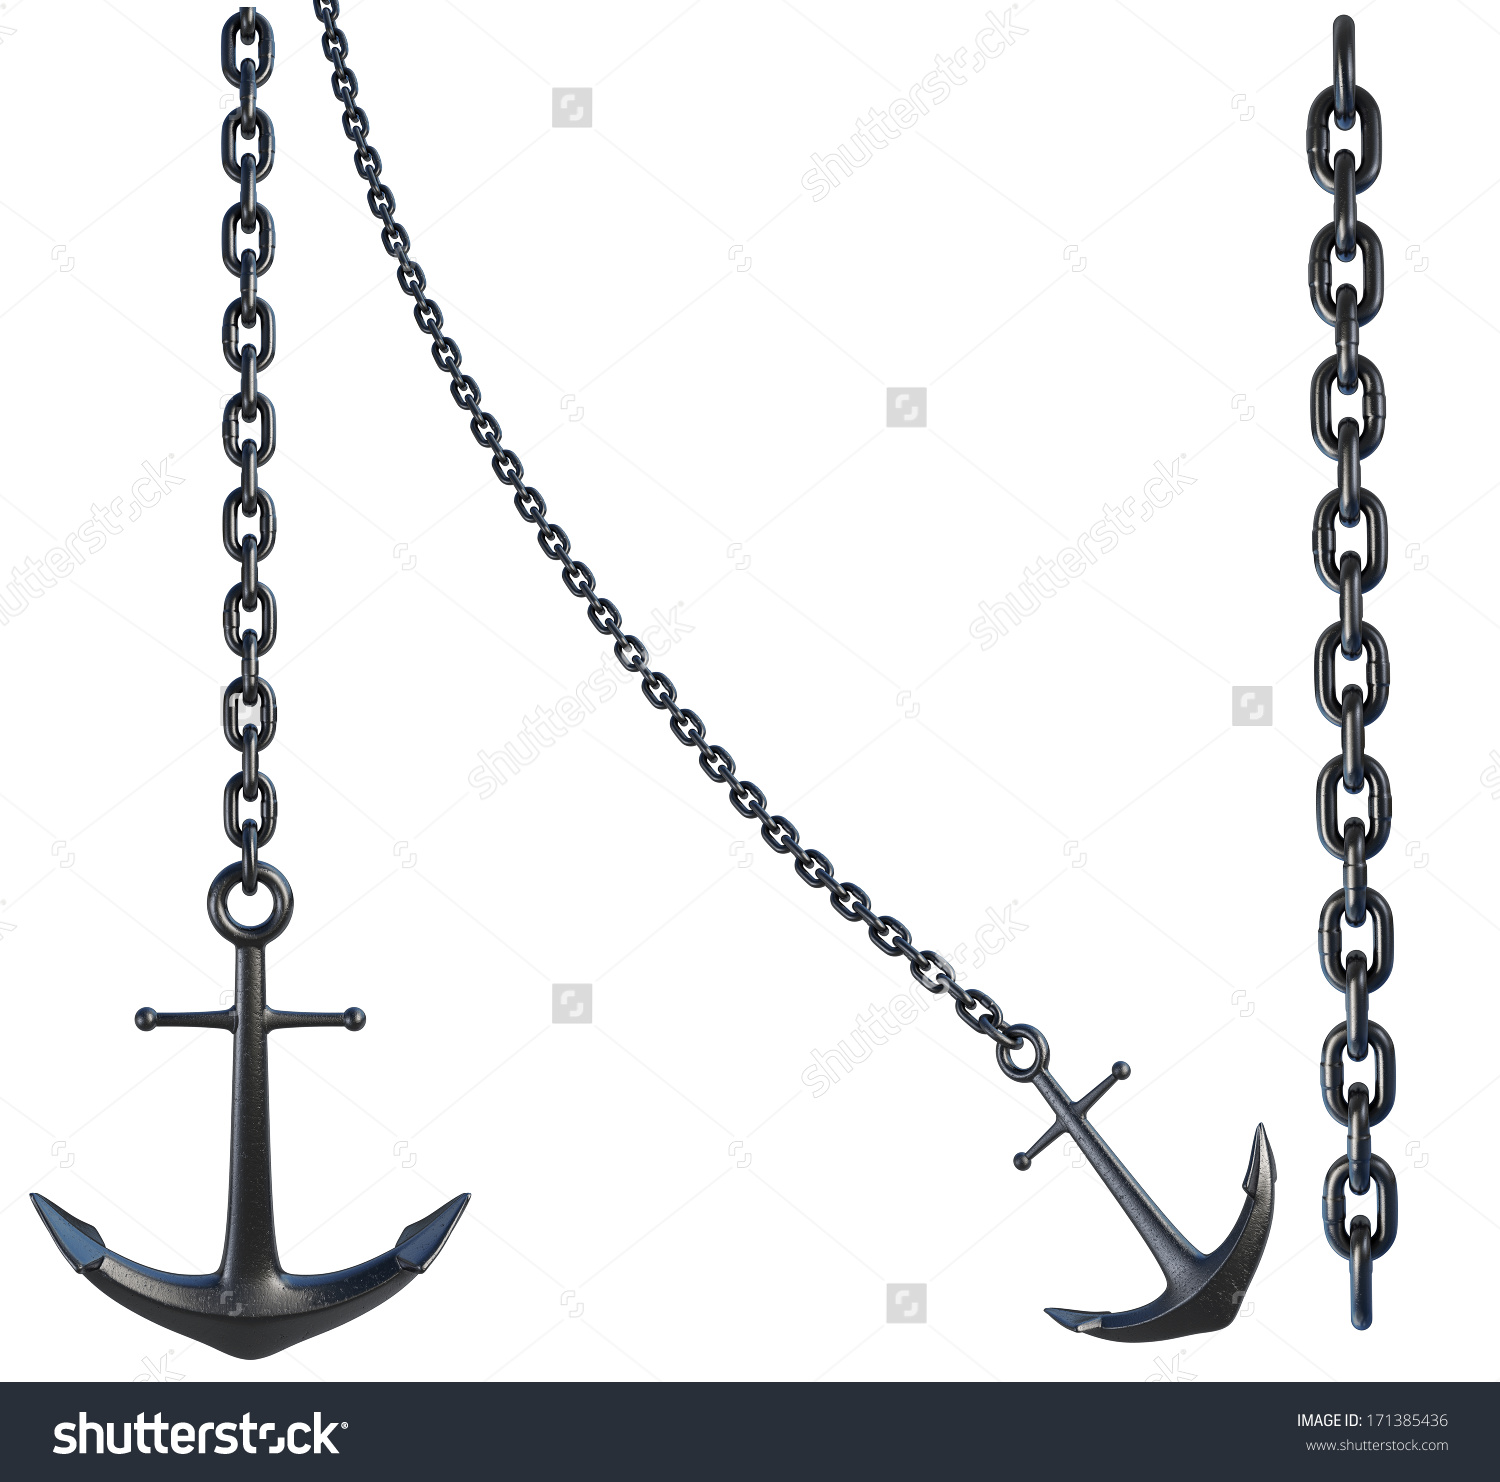 Anchor chain clipart - Clipground